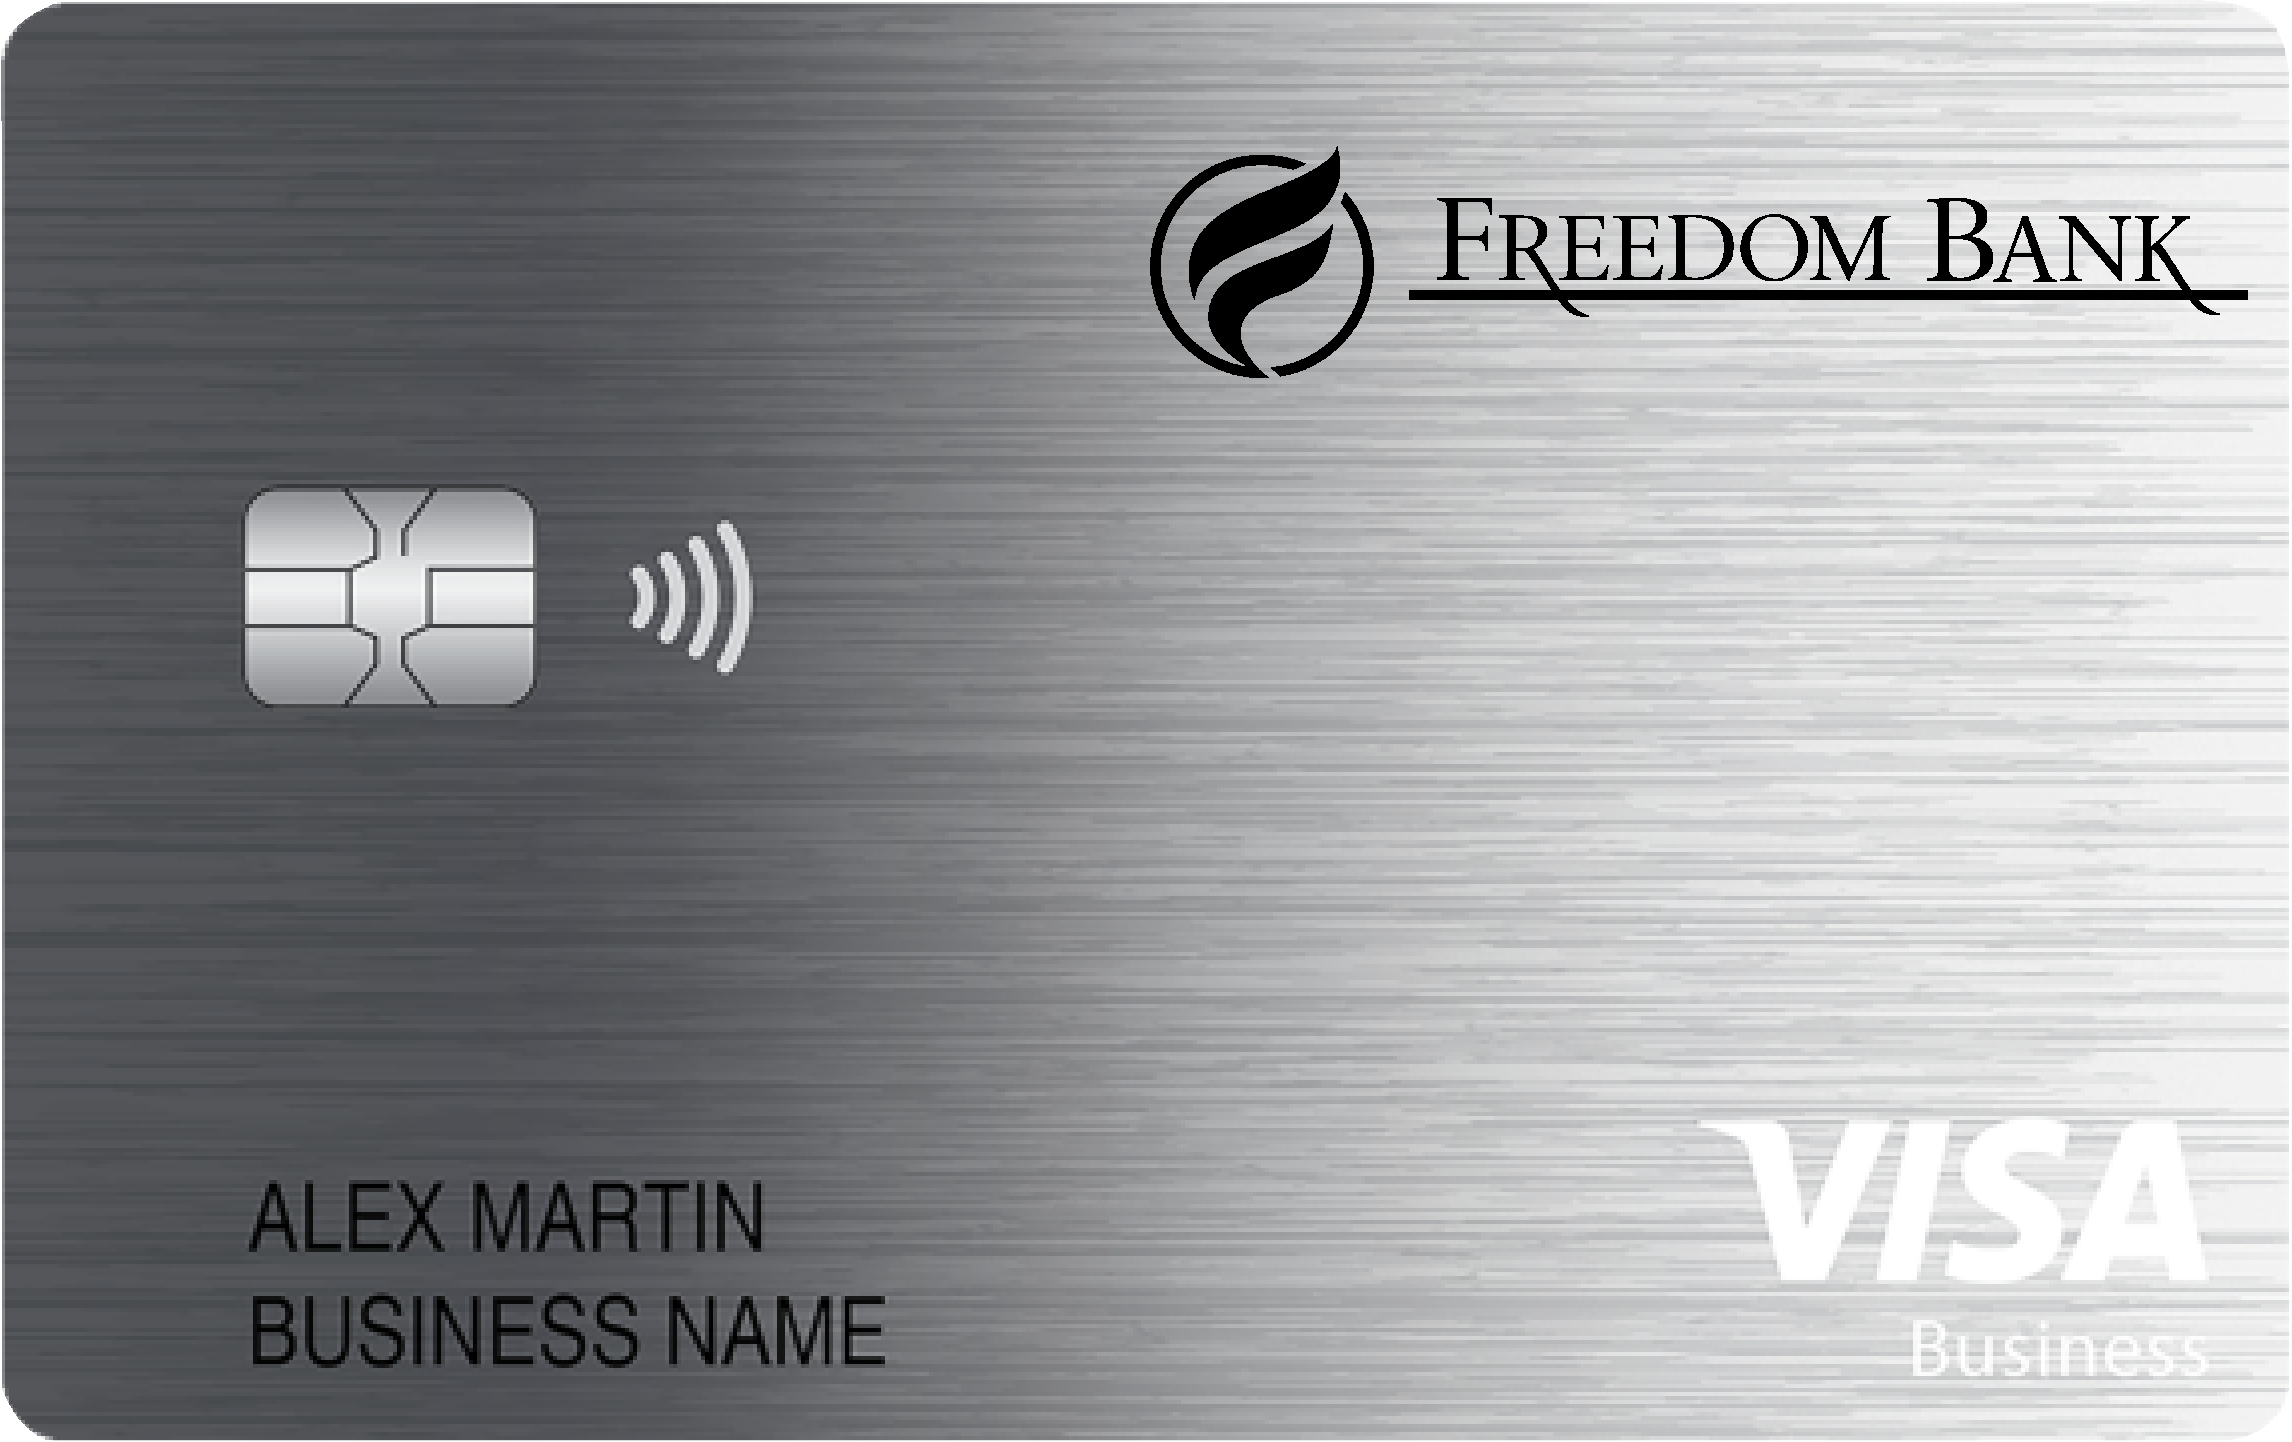 Freedom Bank Business Cash Preferred Card